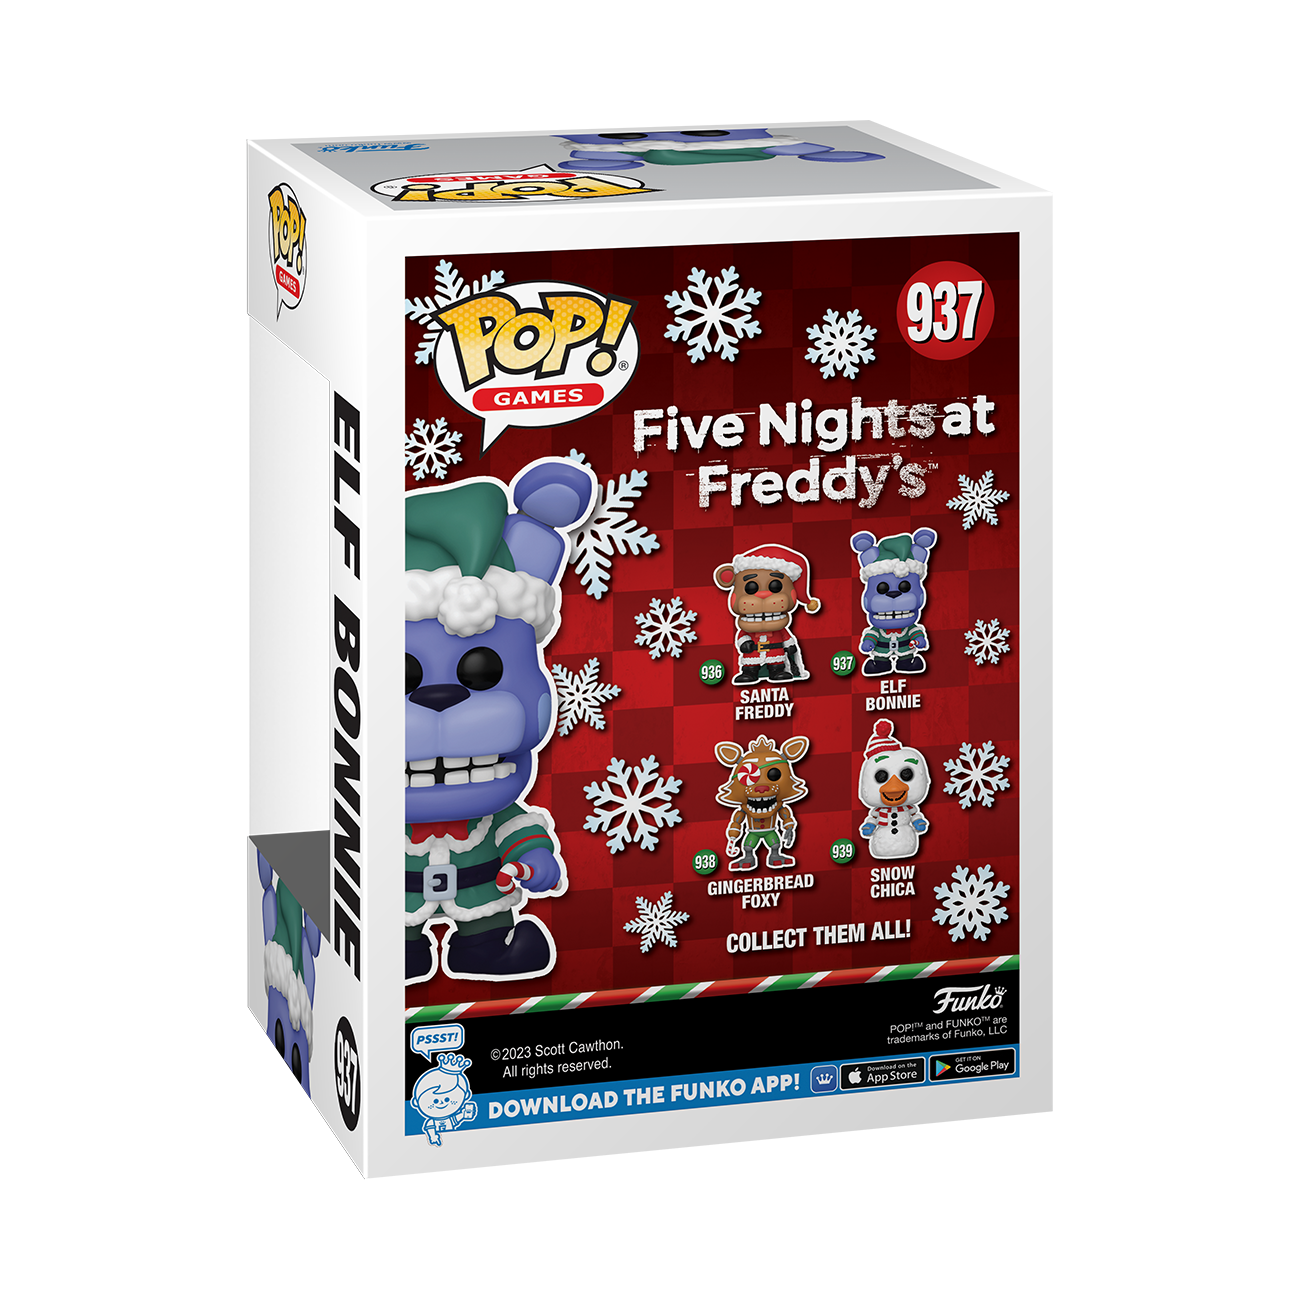 Five Nights at Freddy's Holiday Bonnie 7-Inch Plush